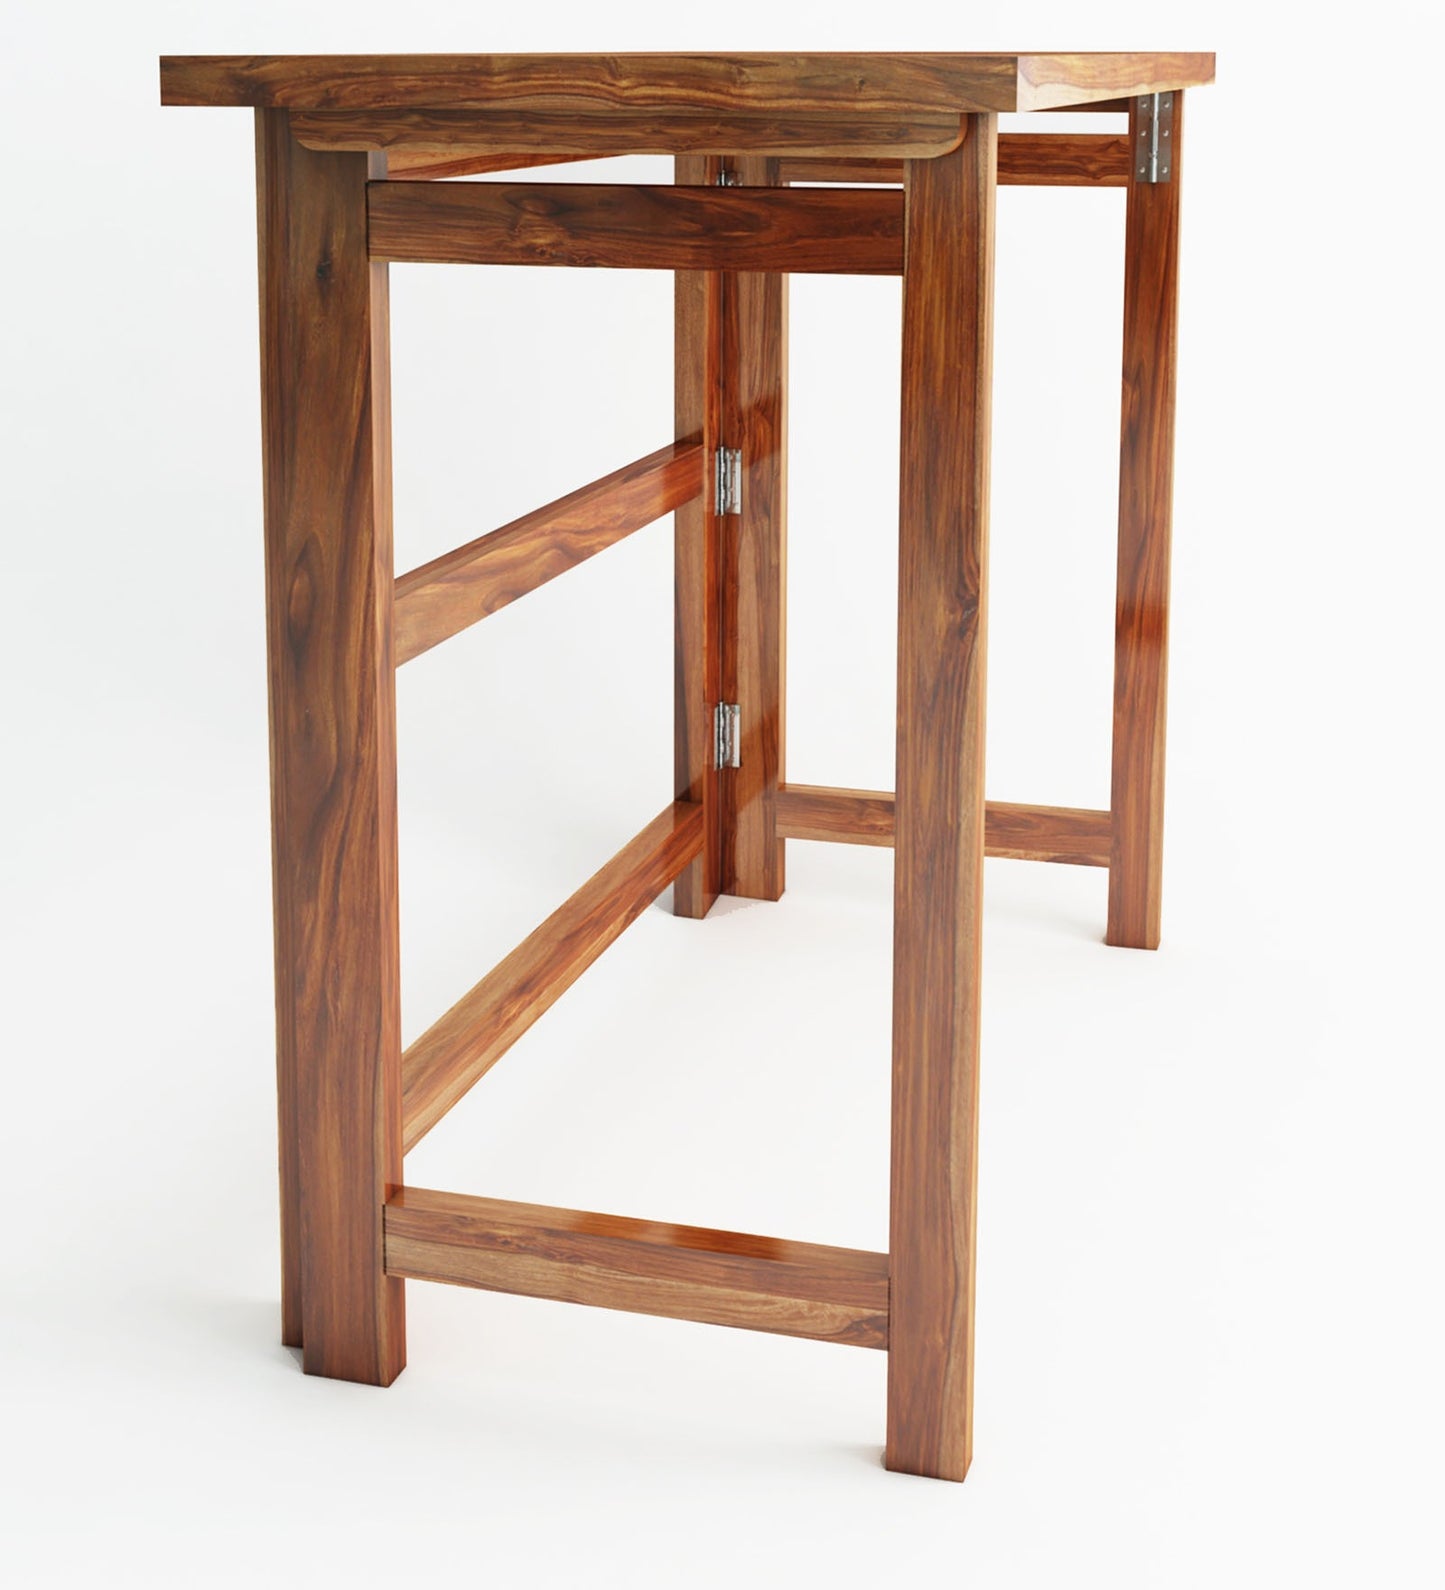 MTANK Solid Wood Writing Desk - Home Office Workbench Desk